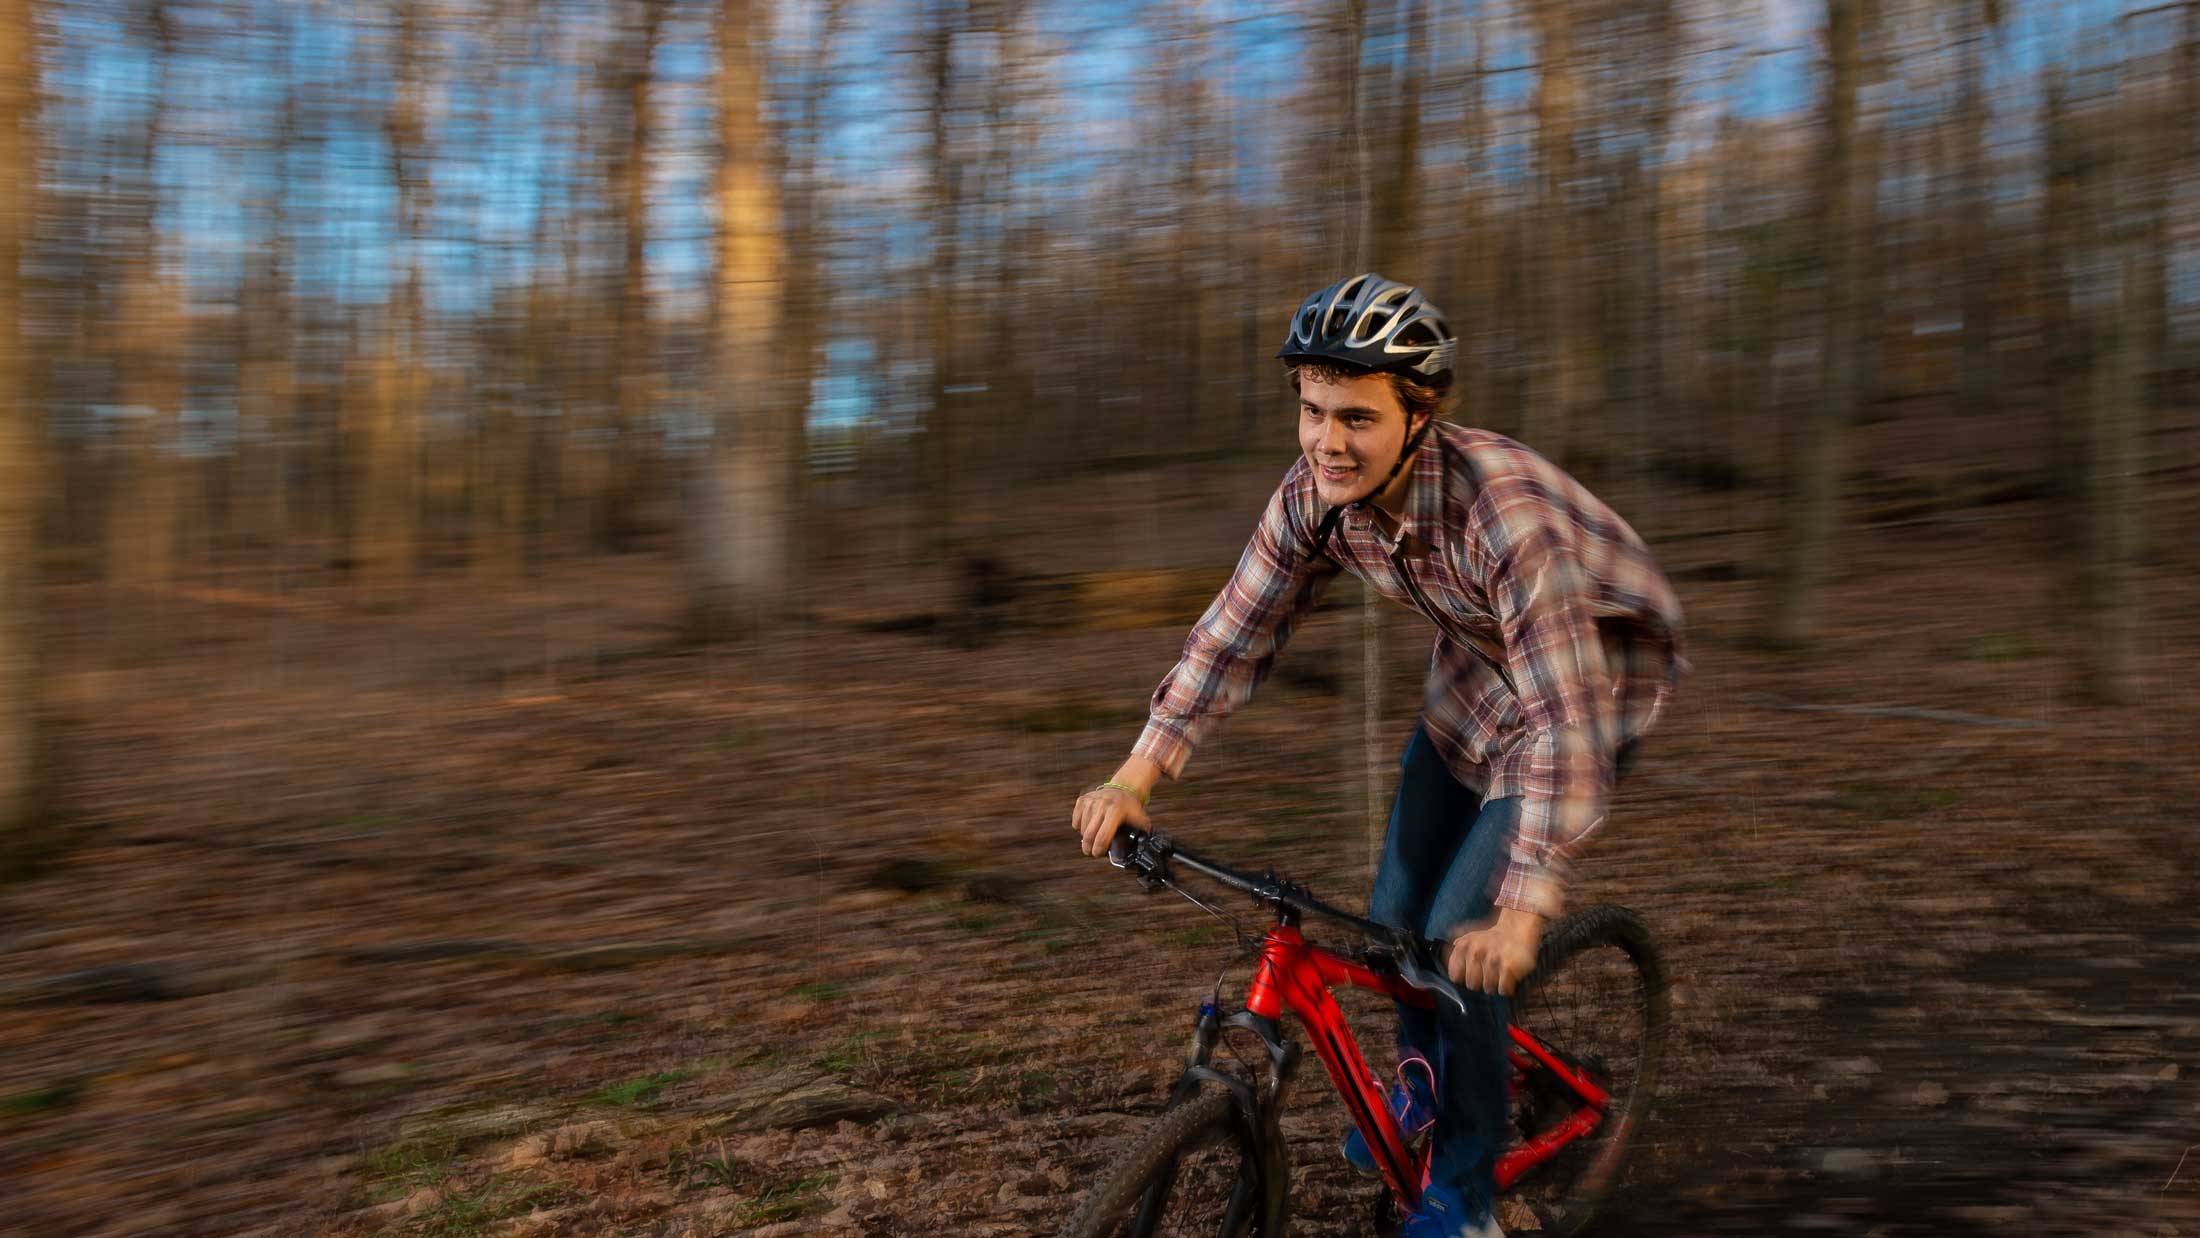 Jacob Watts rides bike on campus trails